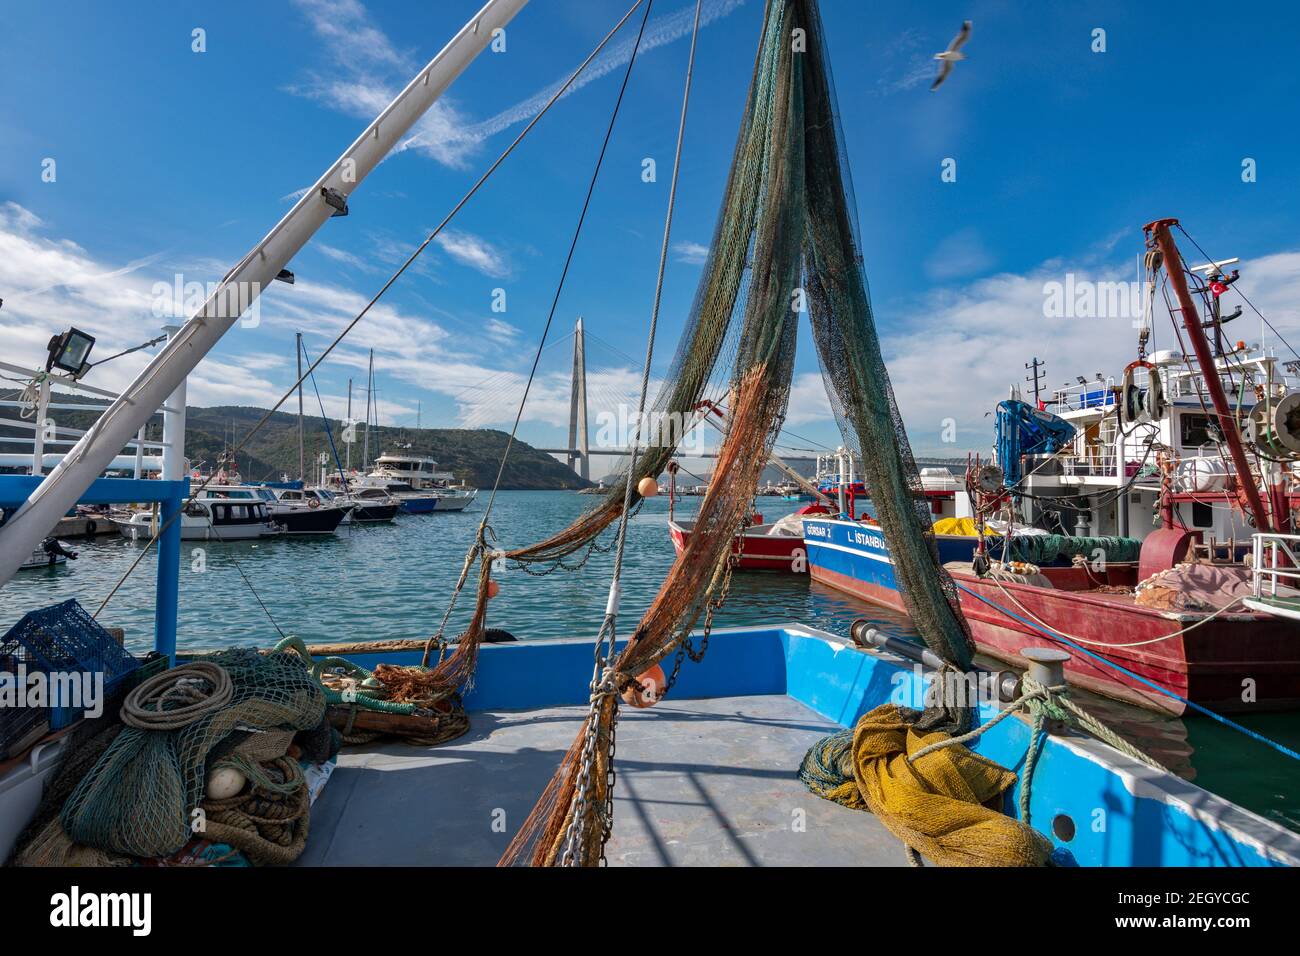 Poyrazkoy Fishing Harbor in Beykoz district of Istanbul, Turkey Stock Photo